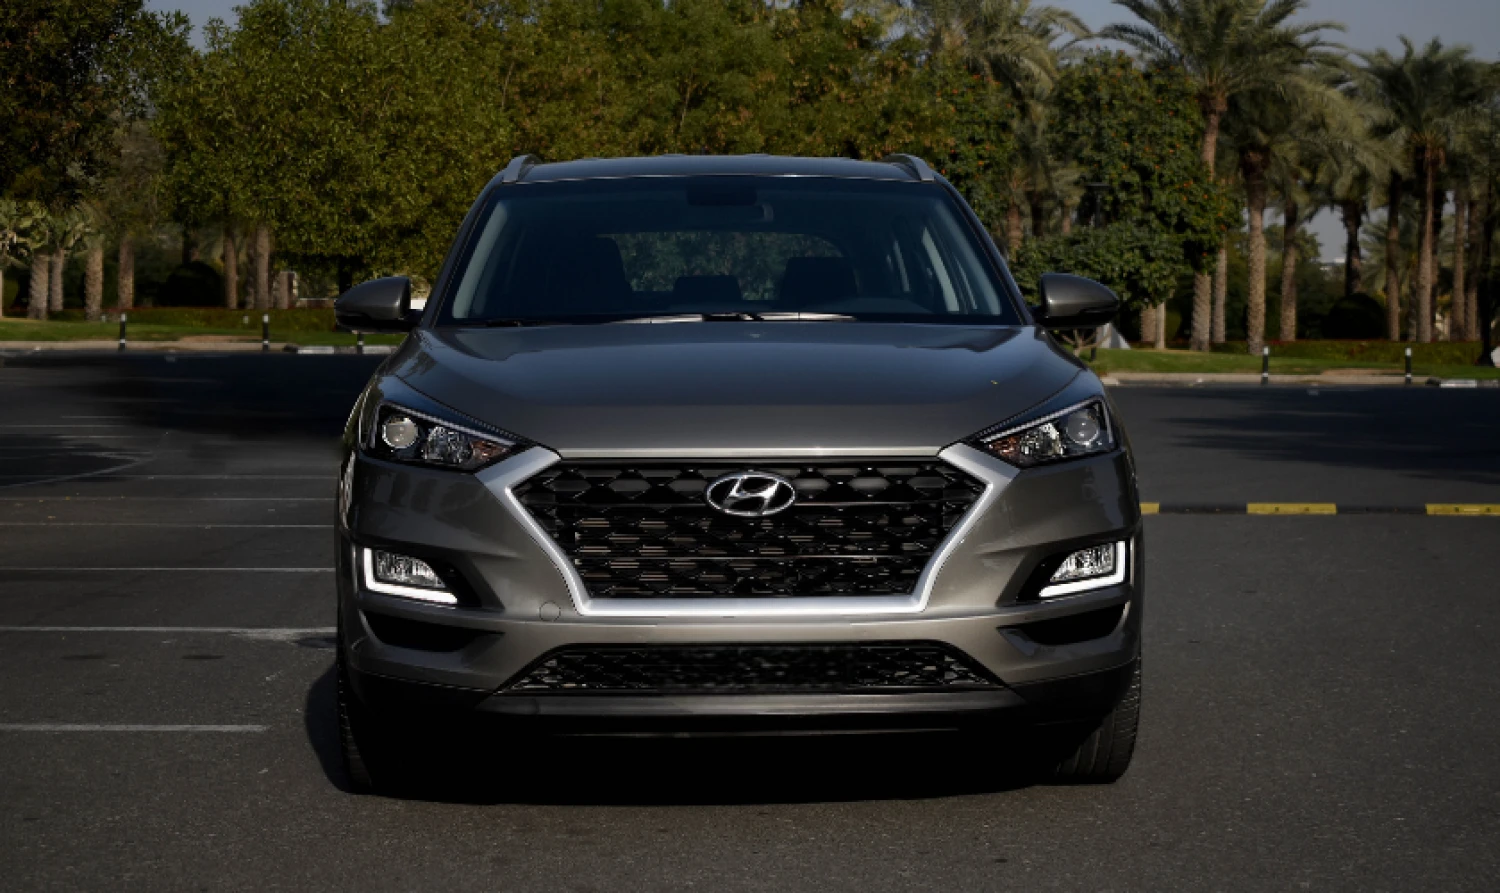 Hyundai Tucson front